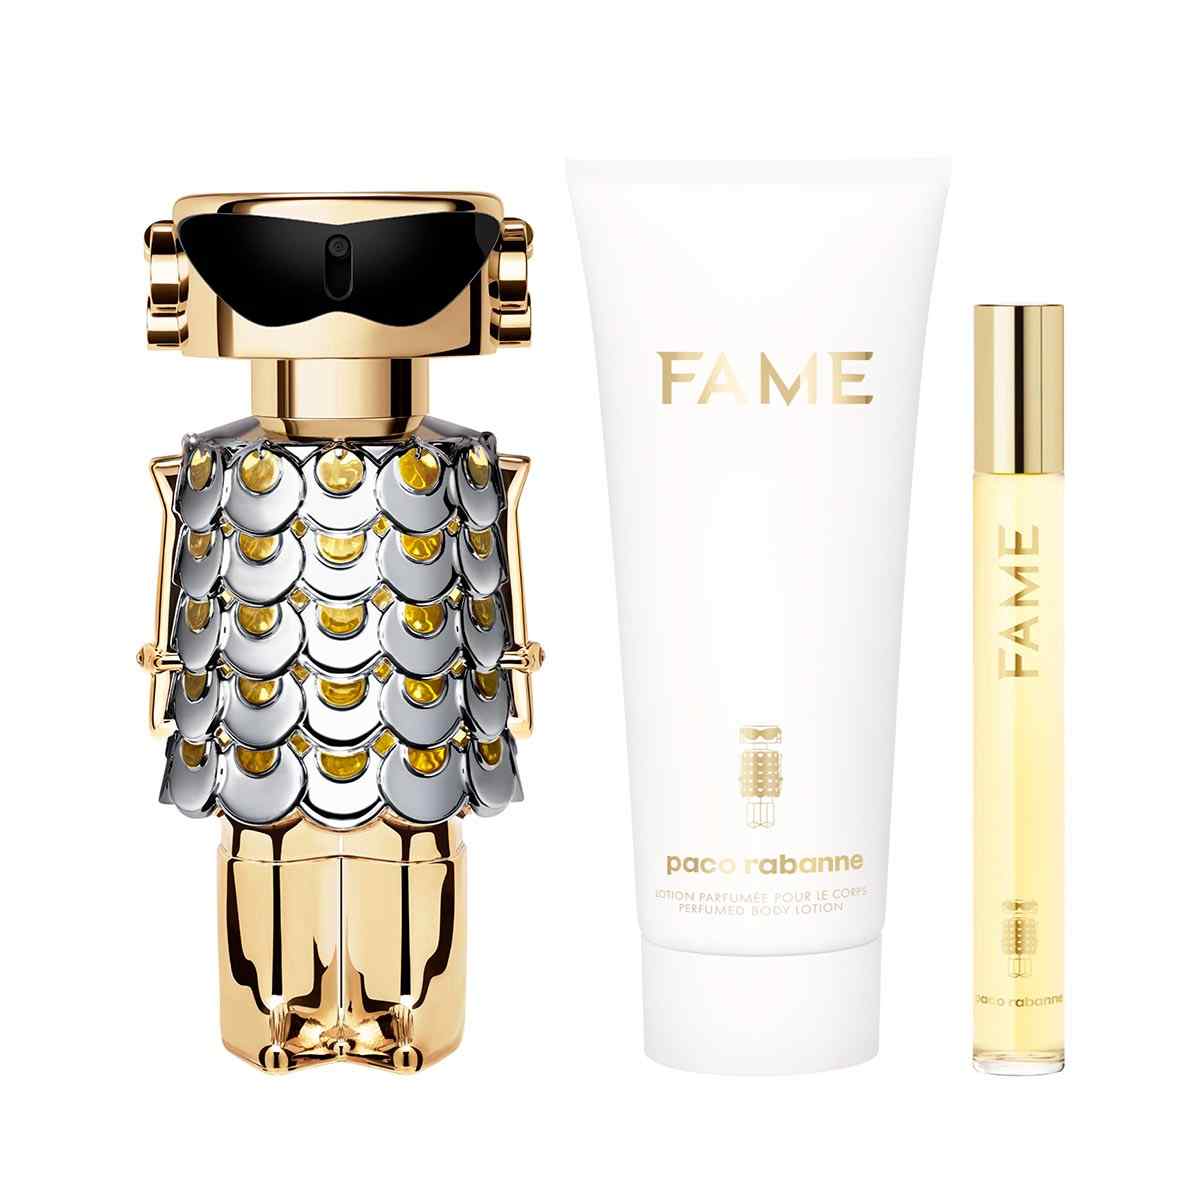 Paco Rabanne Fame Eau de Parfum 80ml Gift Set